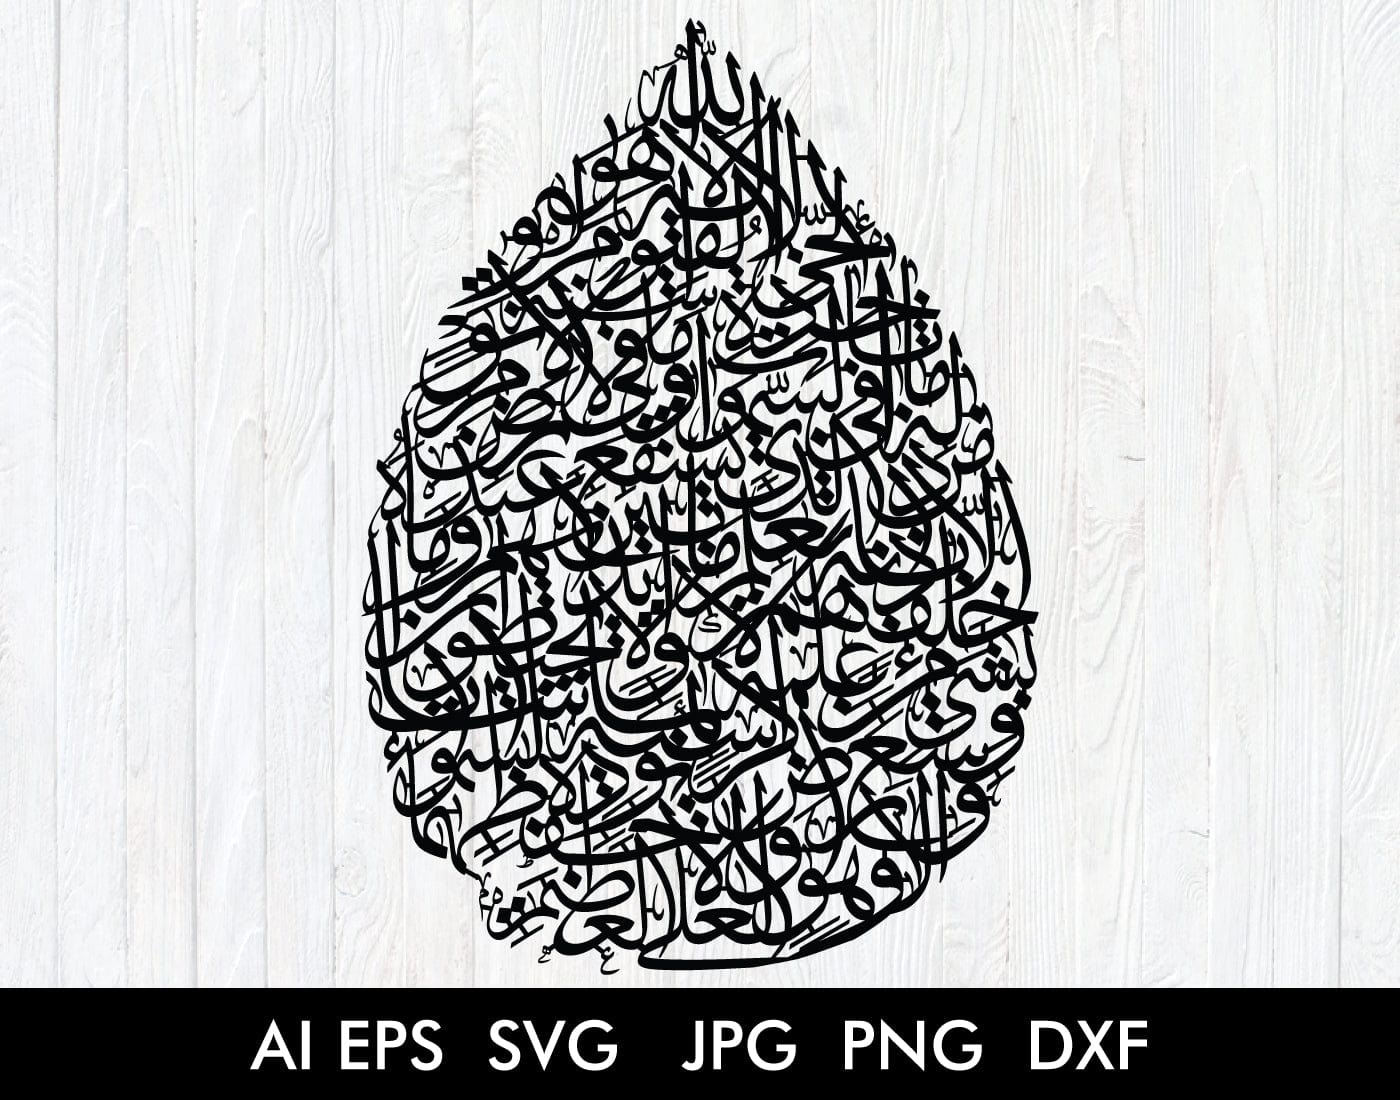 Tear Drop Ayatul Kursi Arabic Calligraphy in Thuluth Script - islamicwalldecors